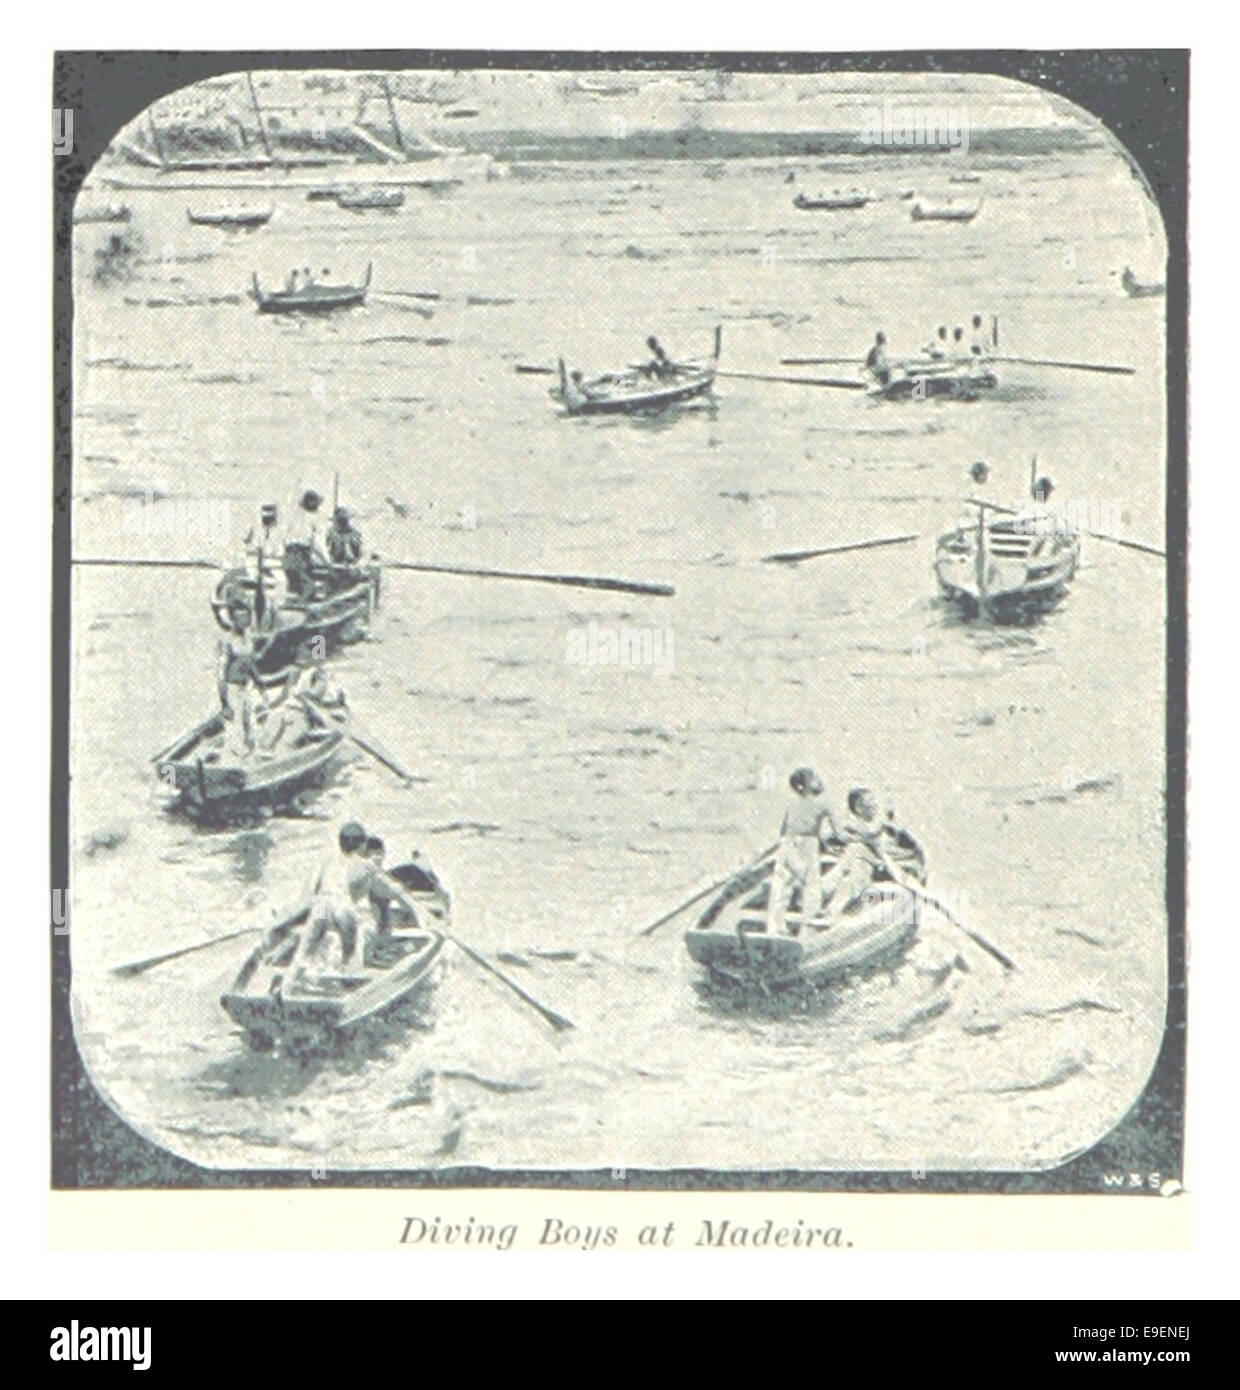 Salmond(1896) PG030 di Madera, diving ragazzi Foto Stock